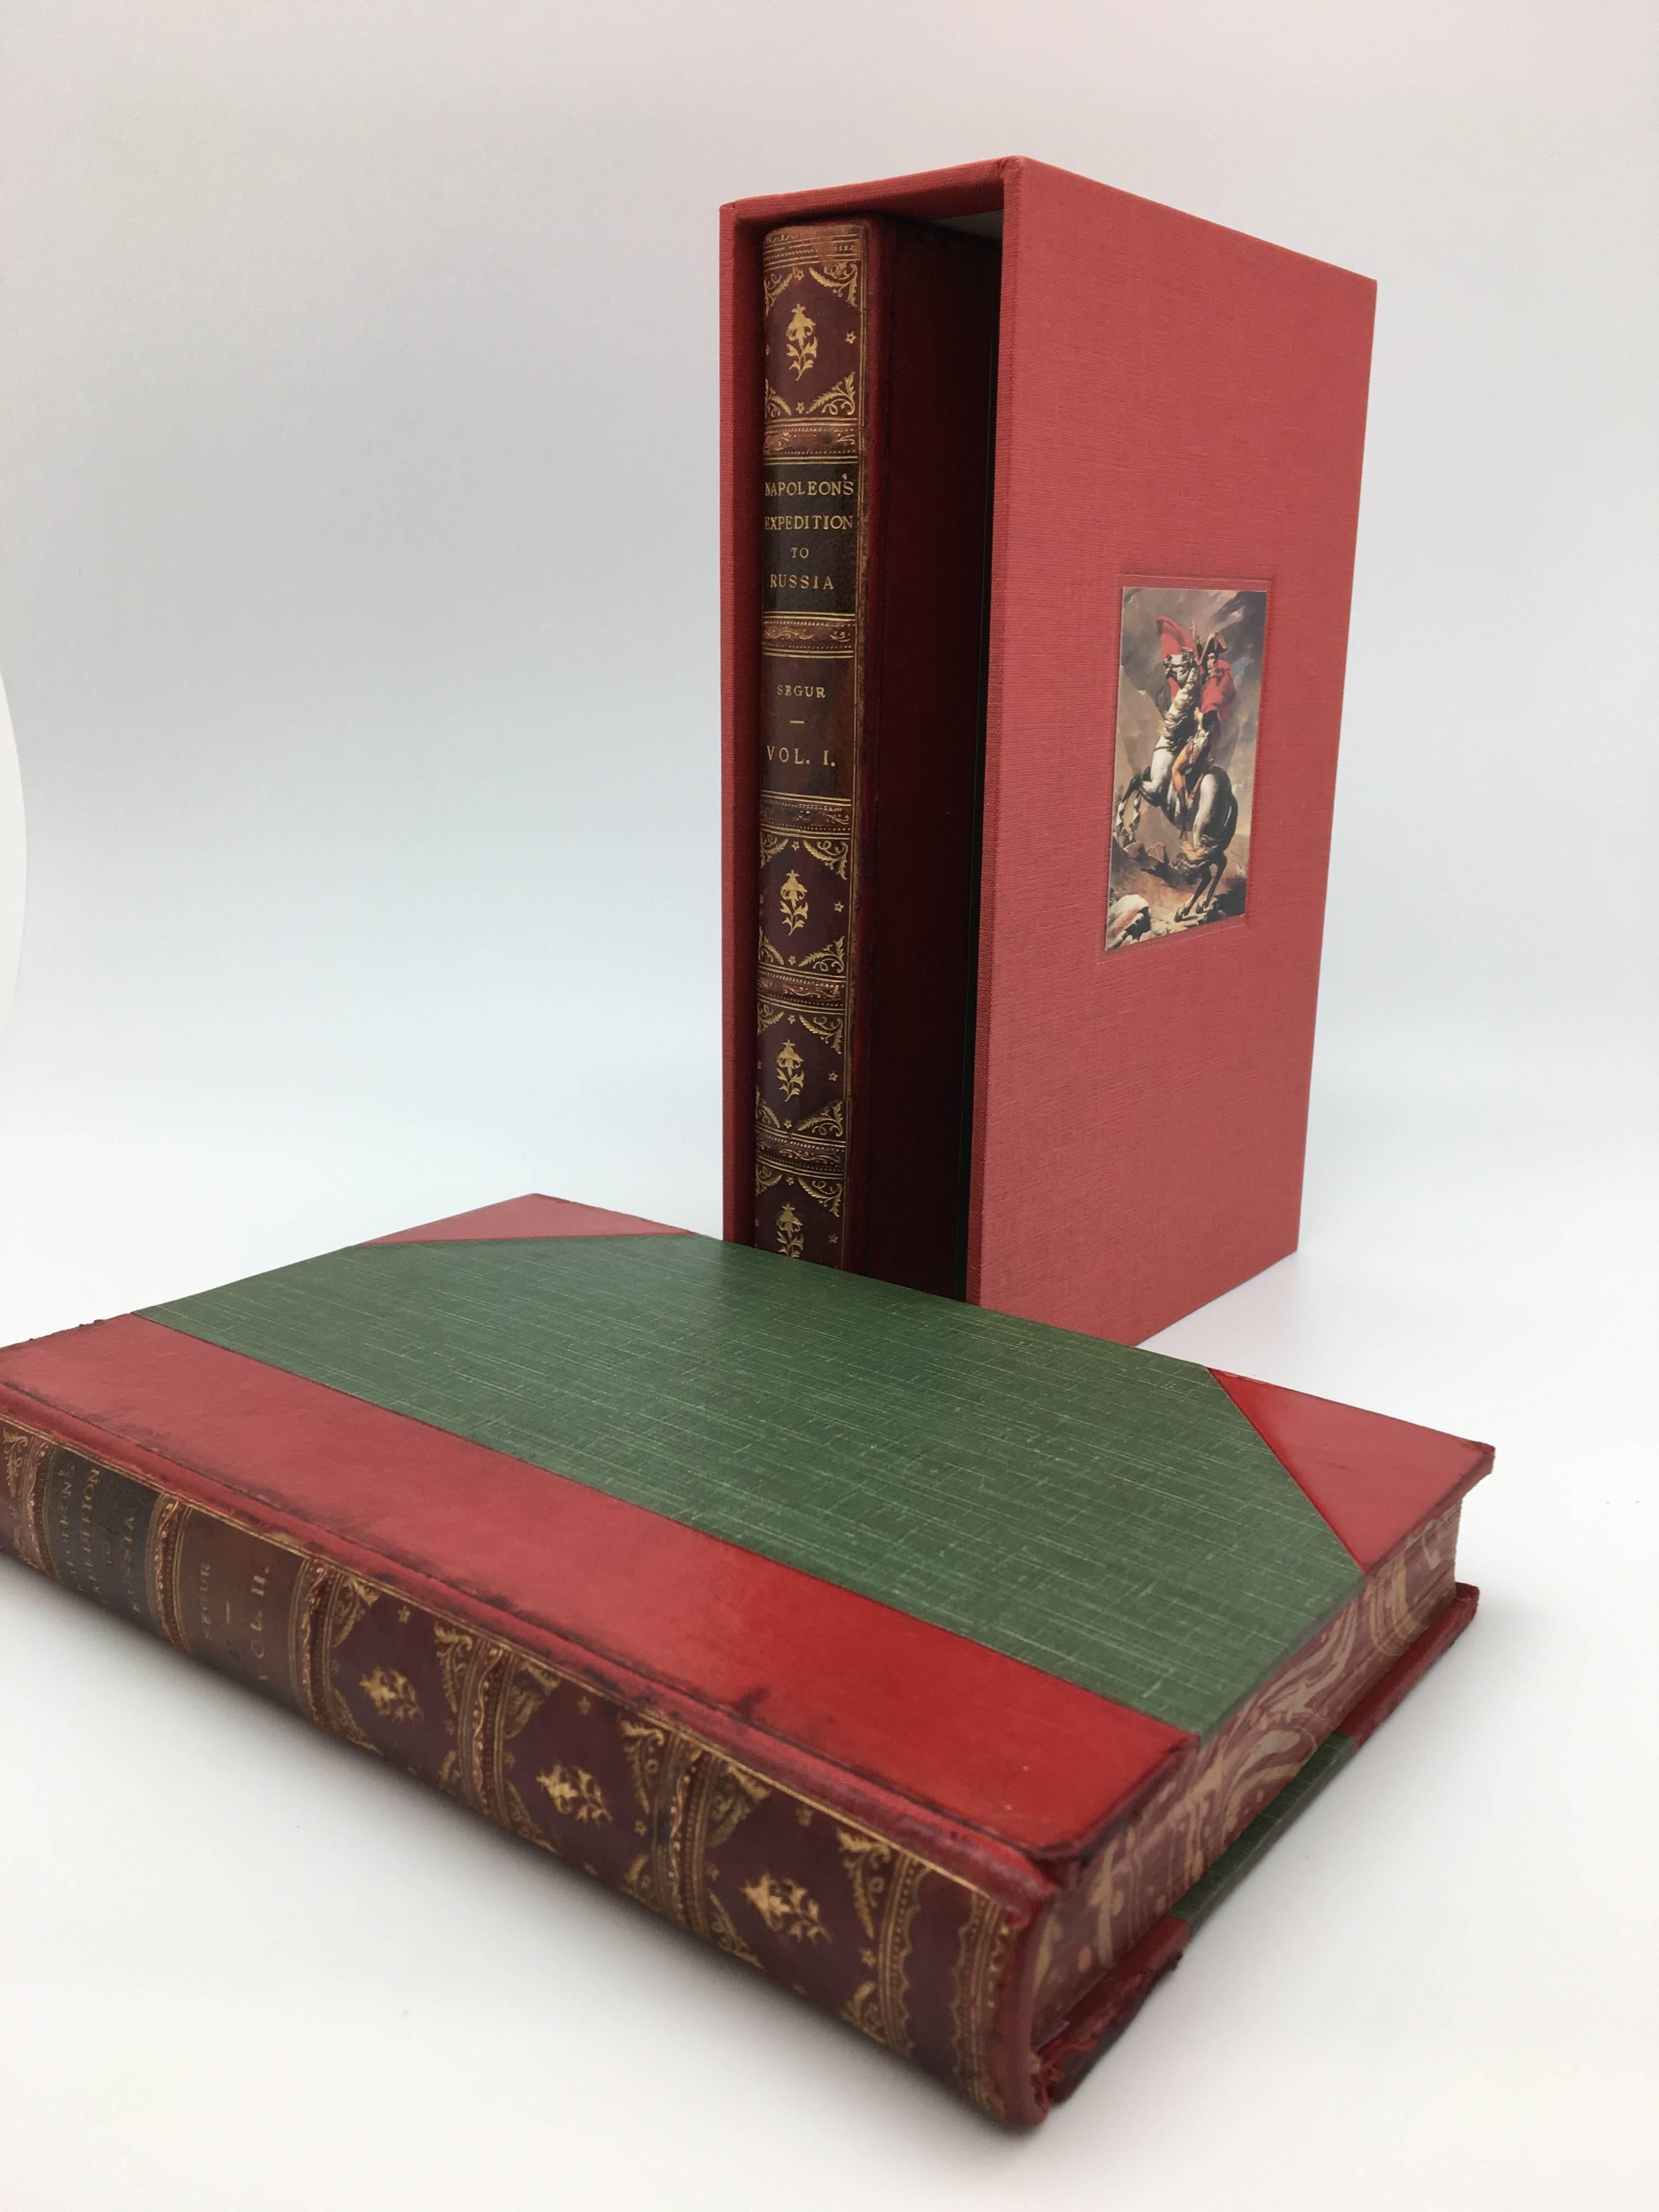 De Segur, Count Philip. Napoleon's Expedition to Russia. London: Treuttel and Wurtz, 1825. Octavo, 2 vols.; stated second edition, 